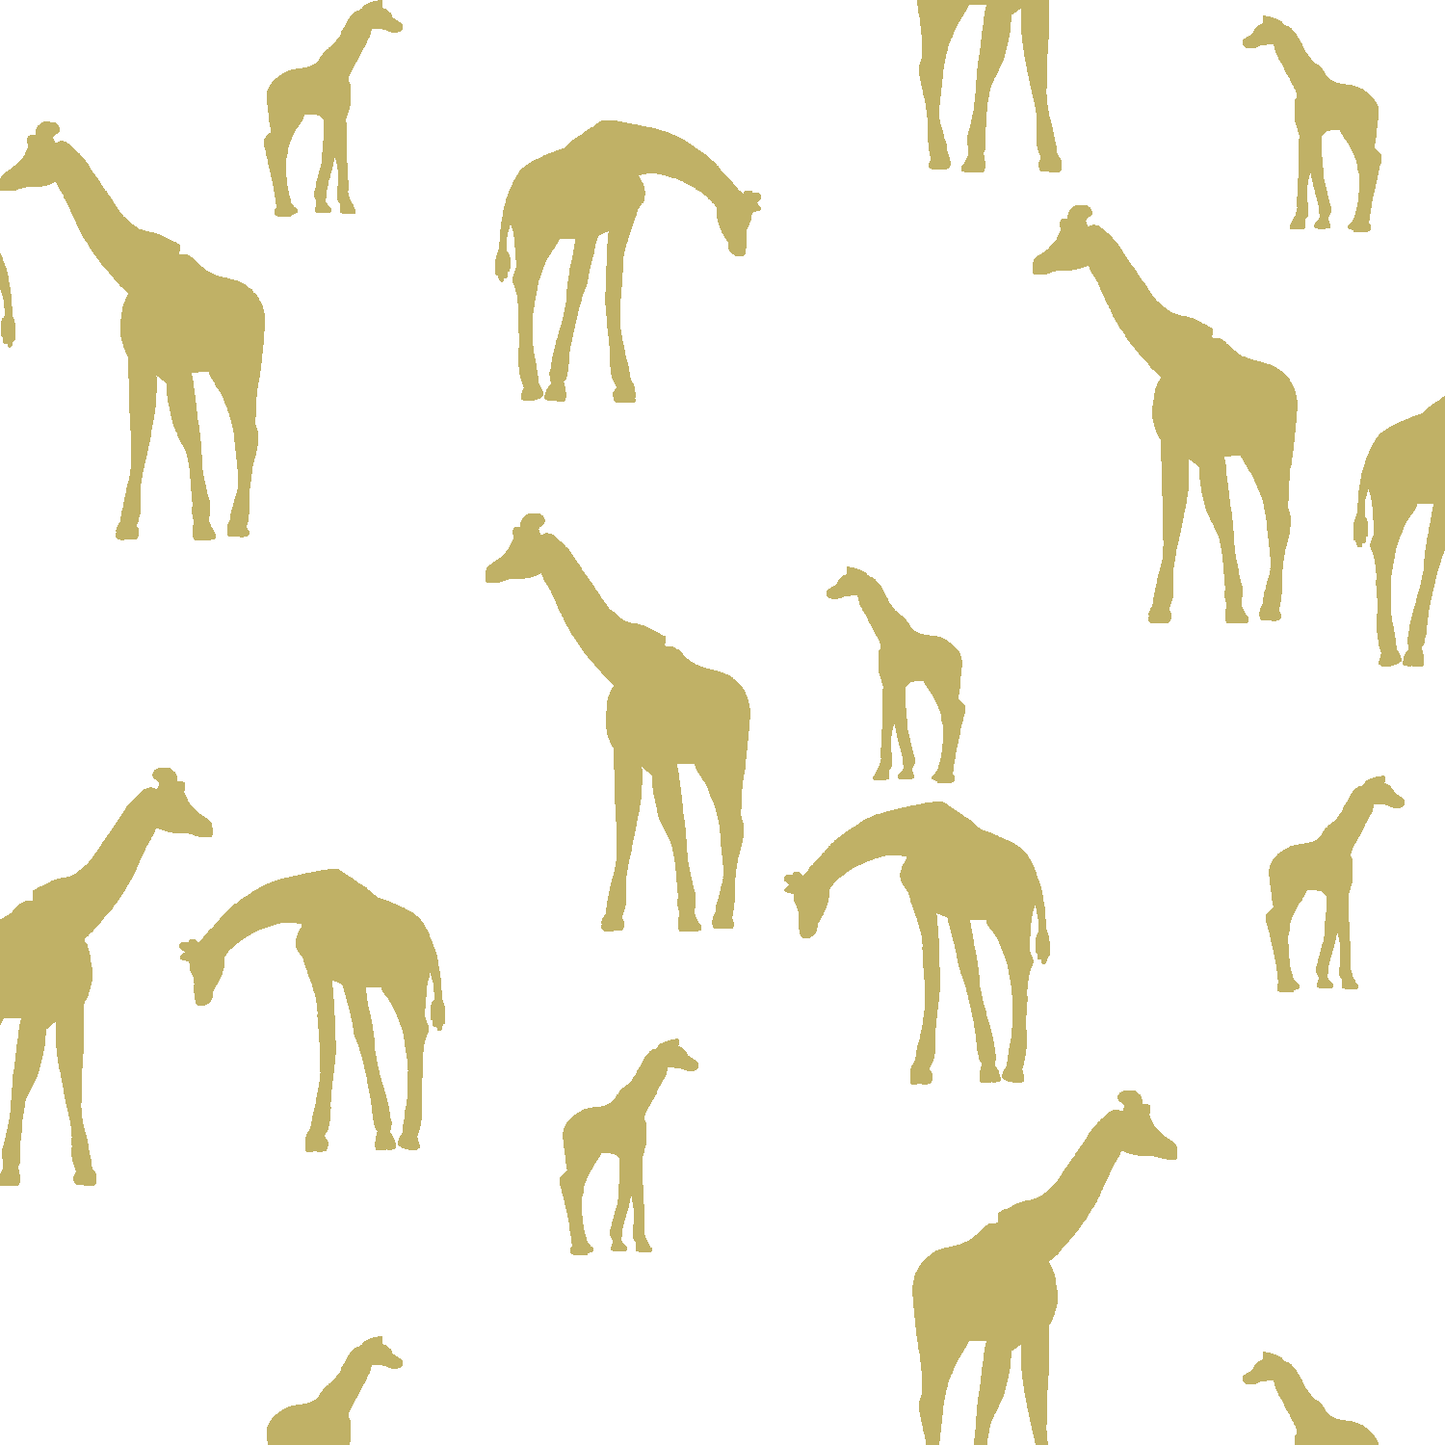 Giraffe Silhouette in Brass on White